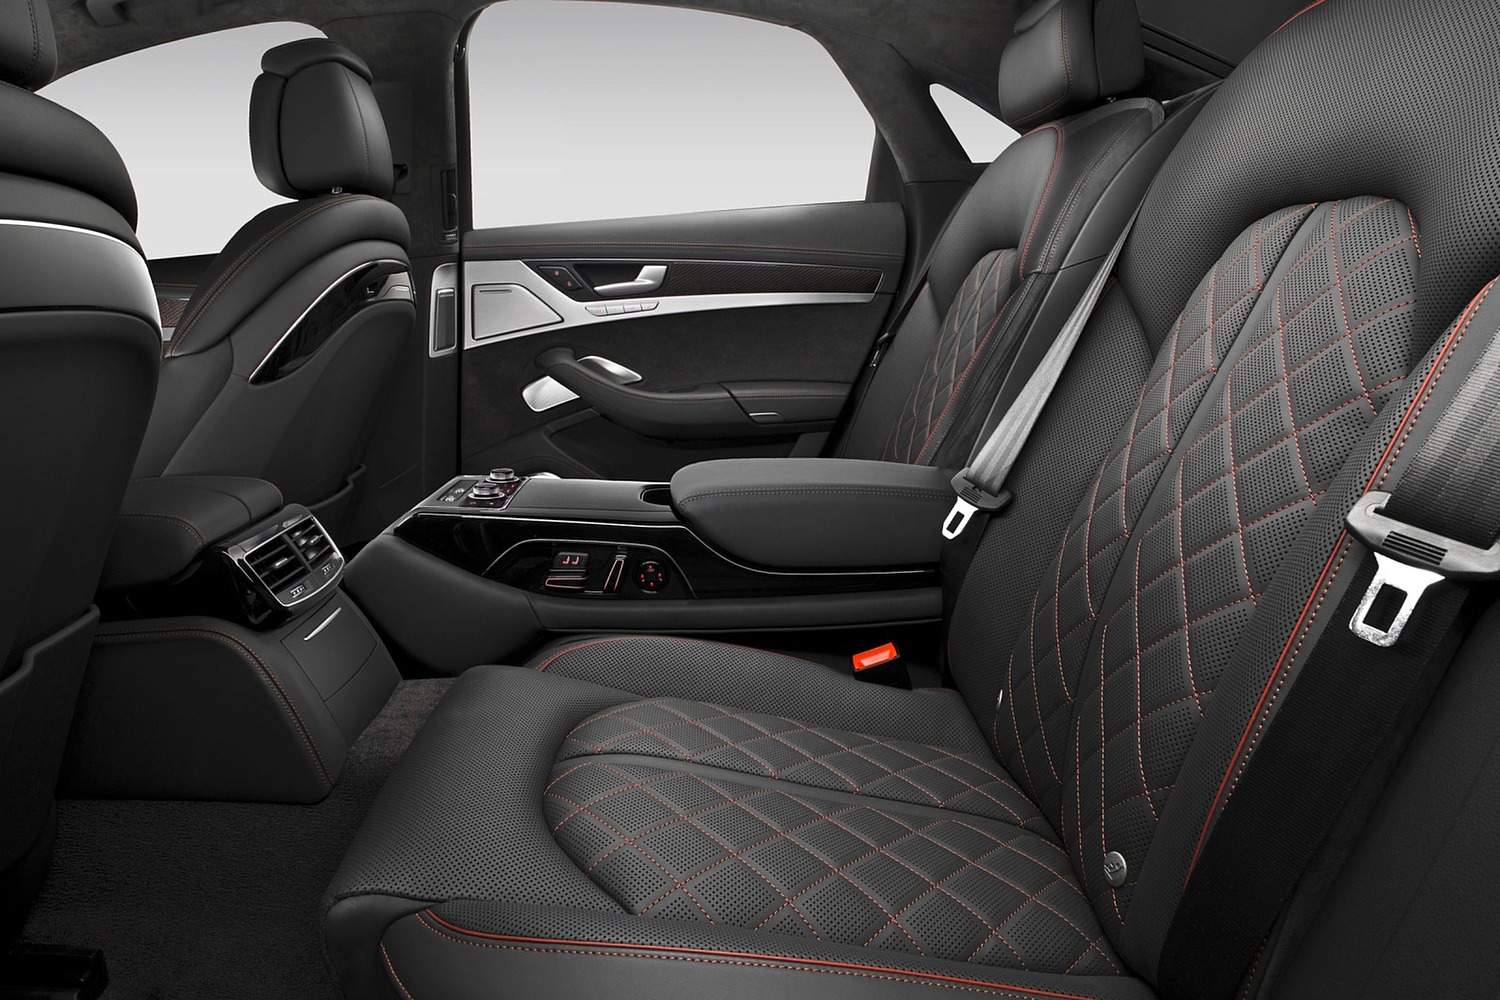 Audi S8 plus quattro Sedan Rear Interior (2016 model year shown)